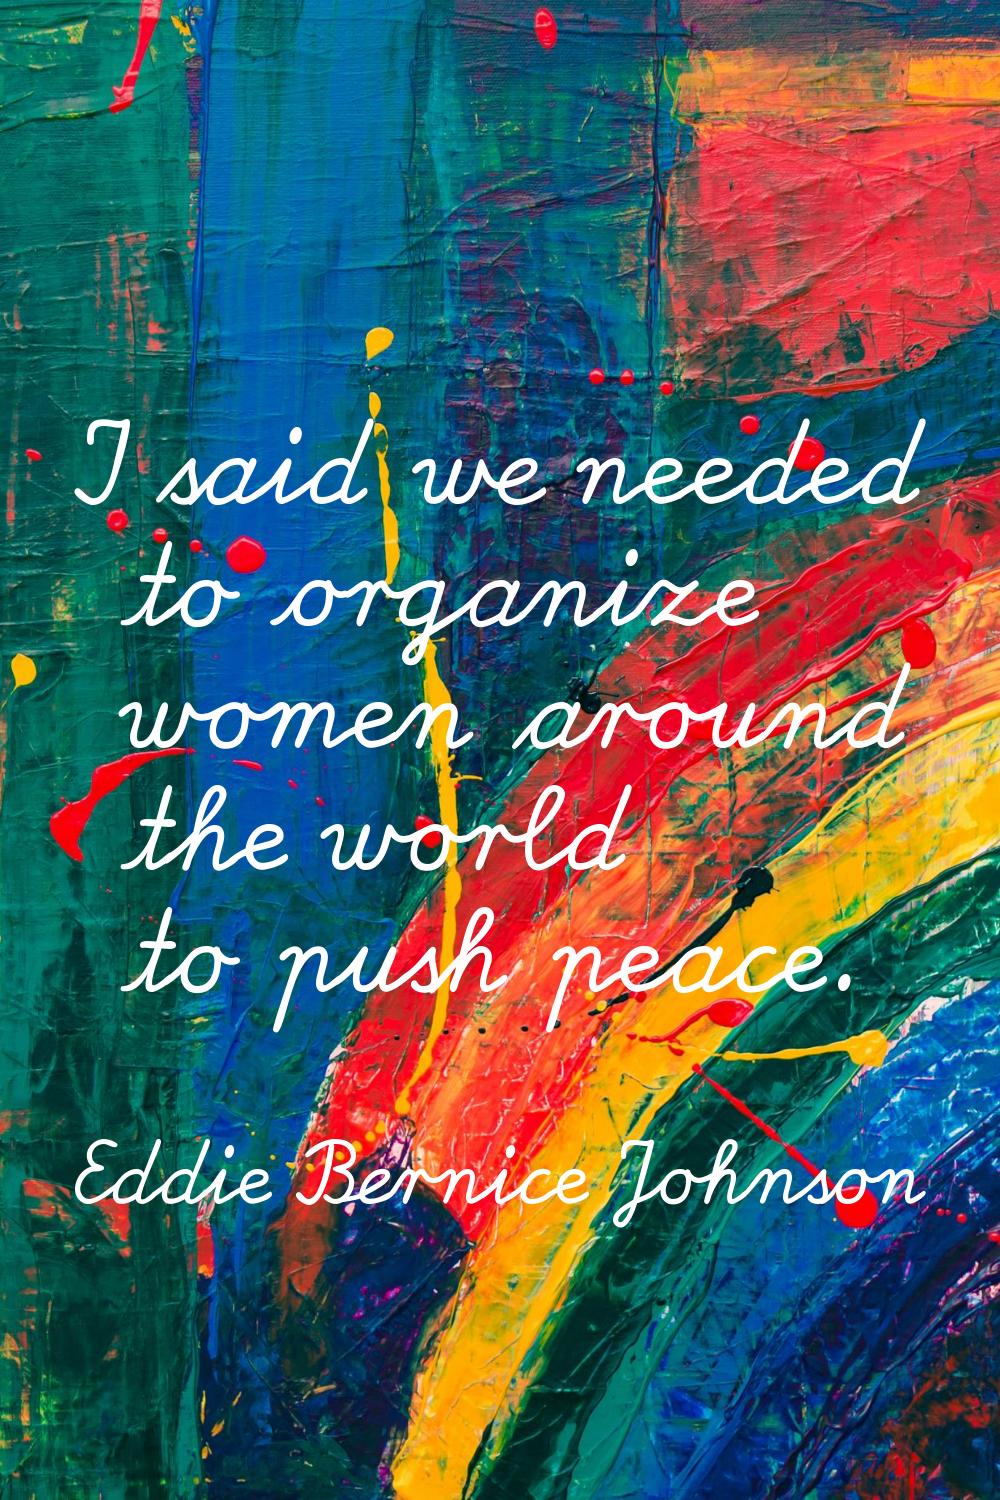 I said we needed to organize women around the world to push peace.